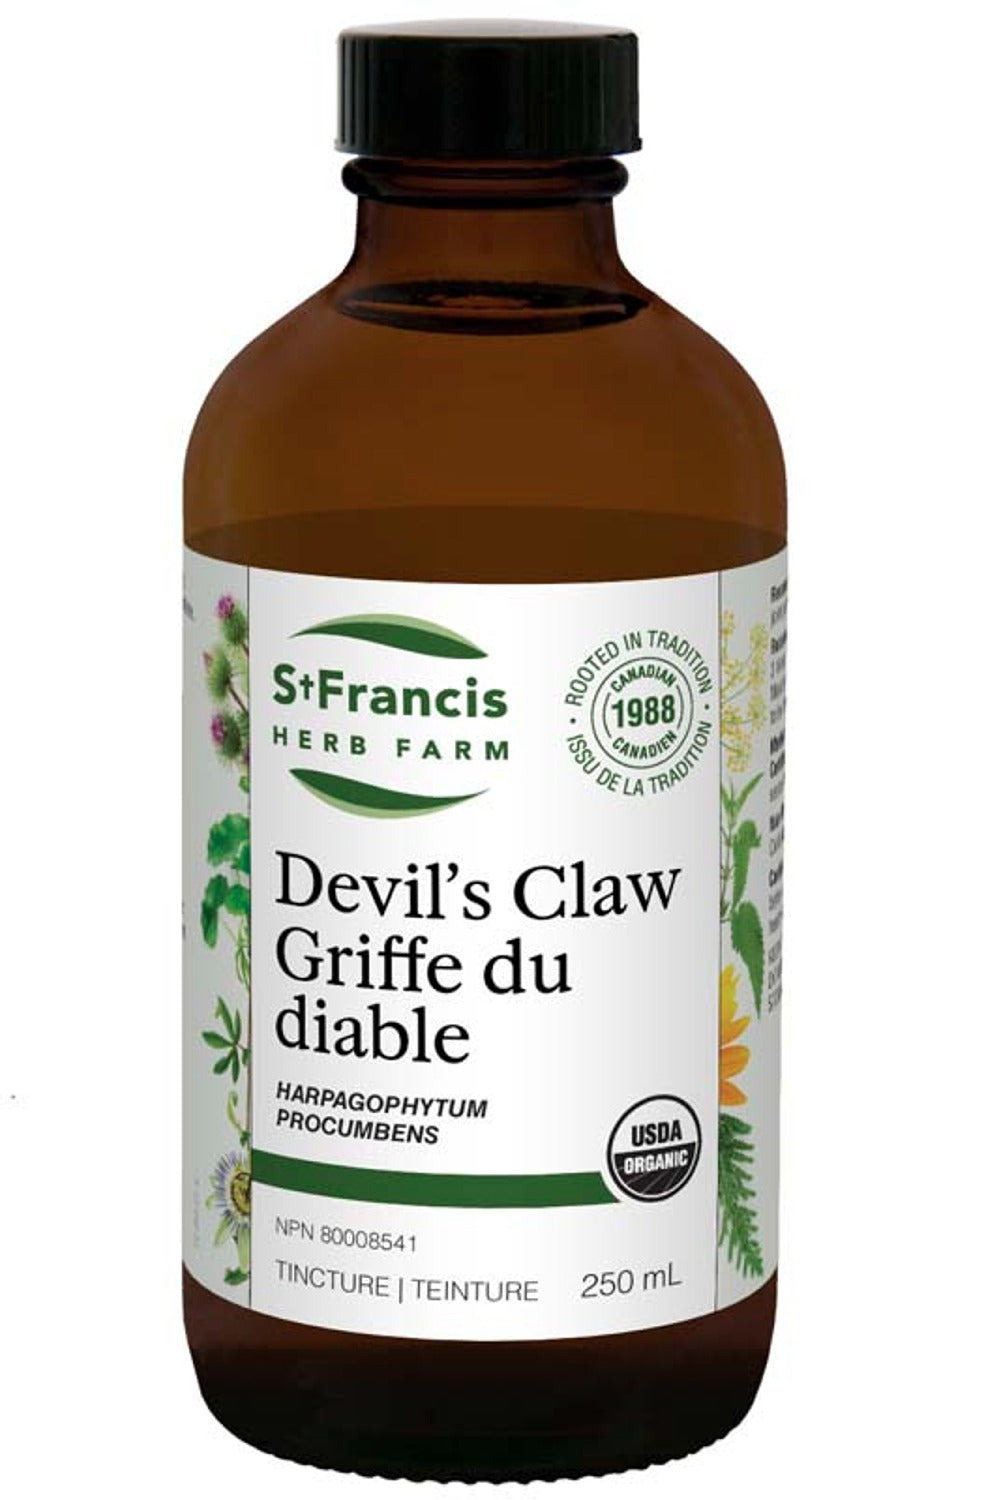 ST FRANCIS HERB FARM Devil's Claw (250 ml)